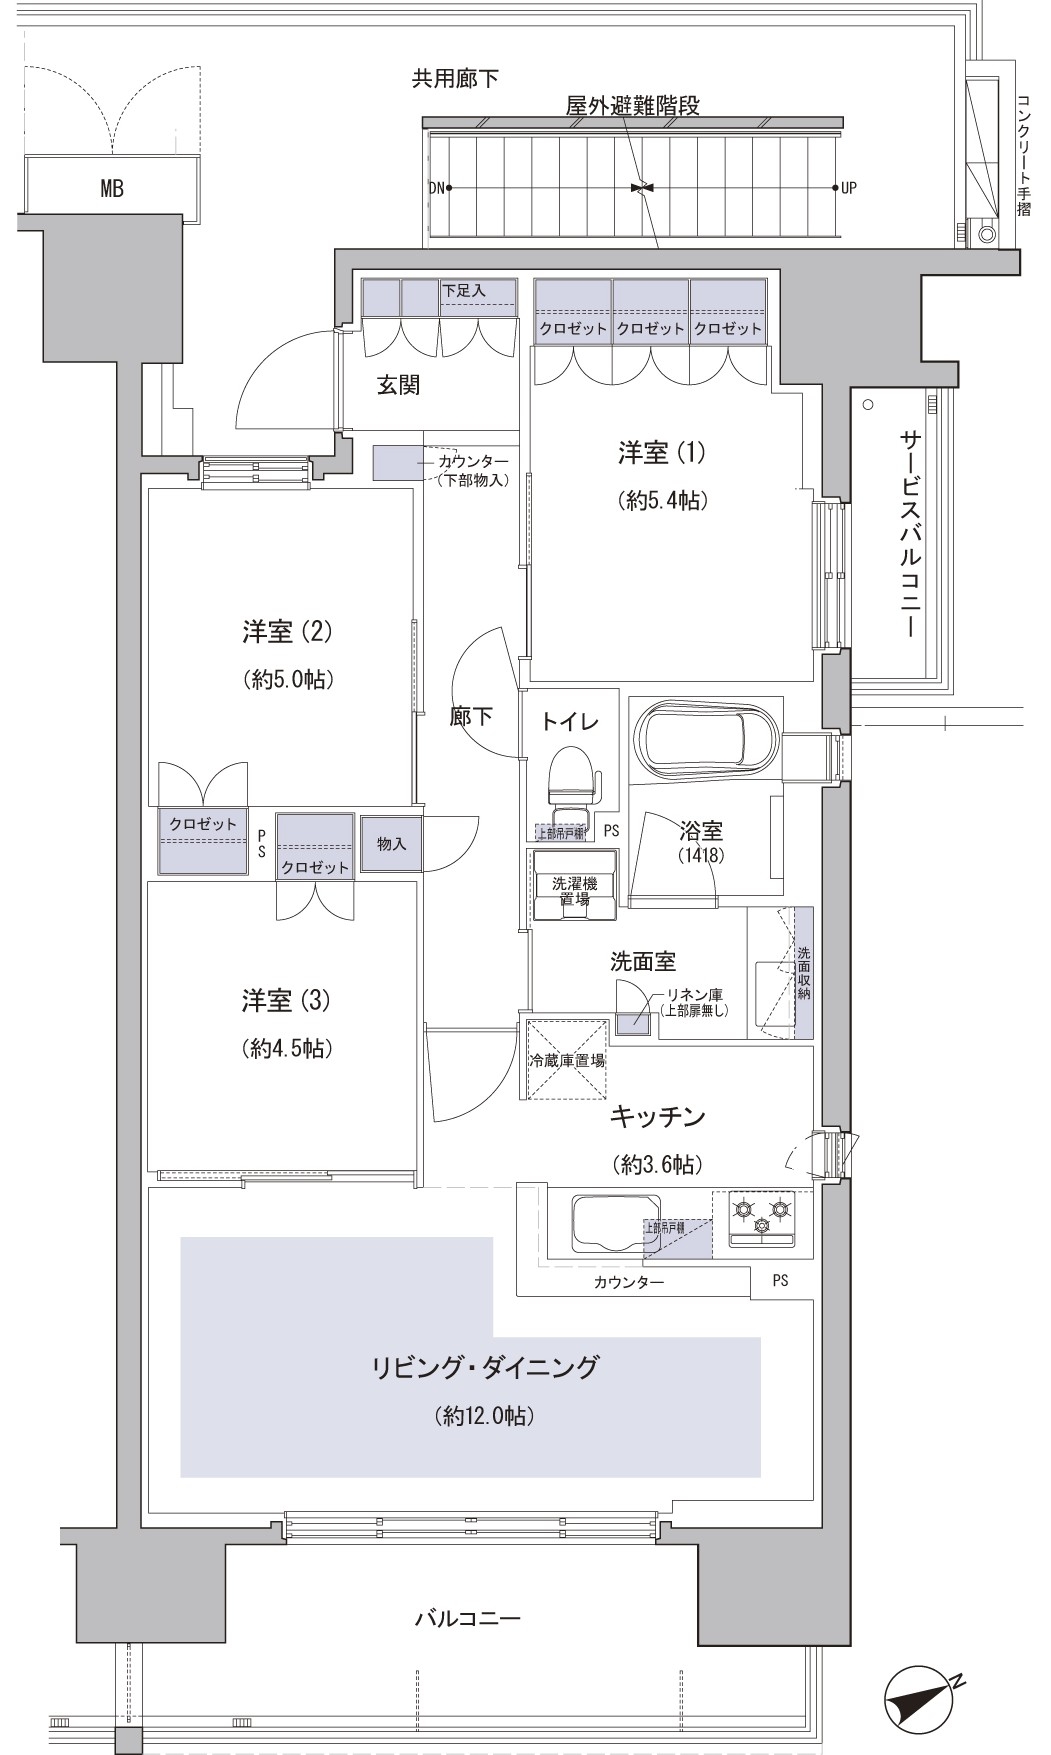 A type 3LDK + WIC Occupied area / 70.31 sq m  Balcony area / 11.16 sq m  Service balcony area / 2.77 sq m   ※ WIC = walk-in closet